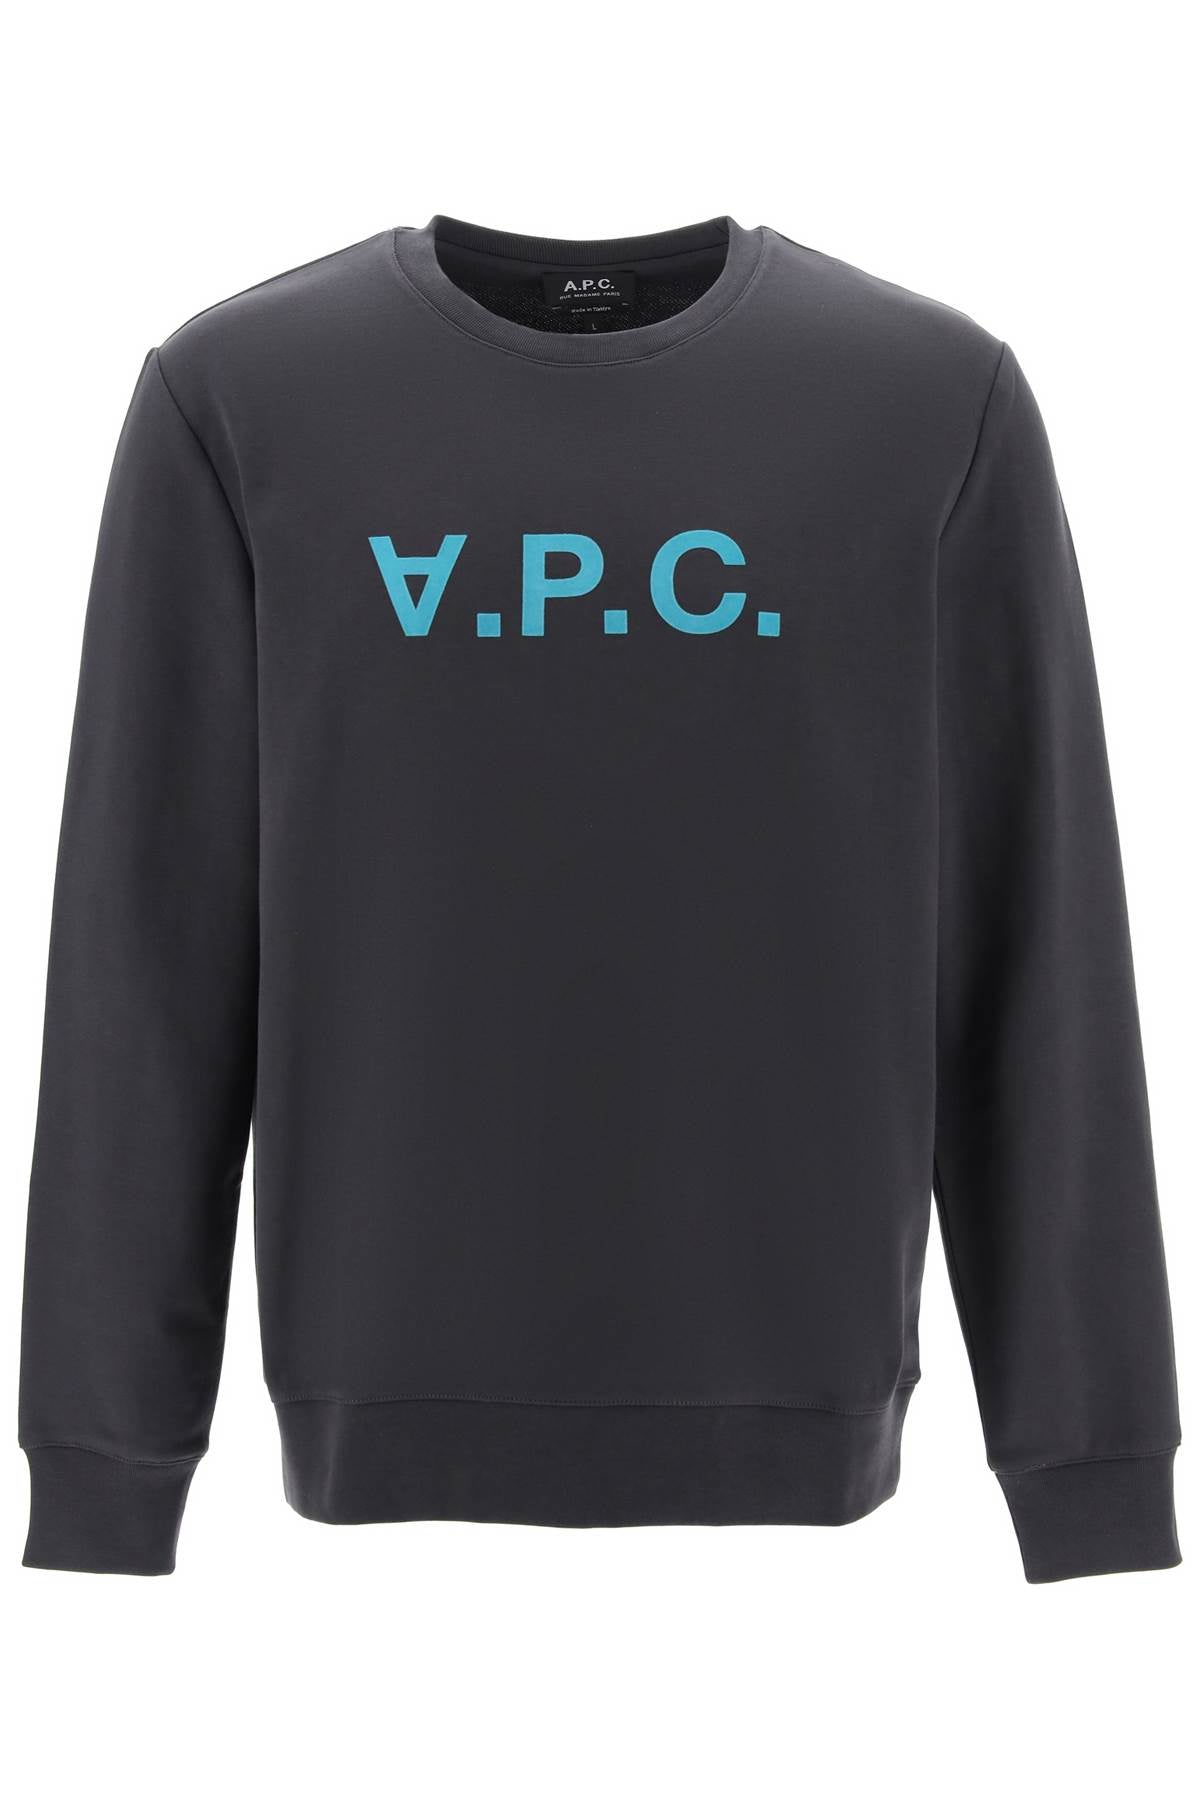 Flock V.P.C. Logo Sweatshirt